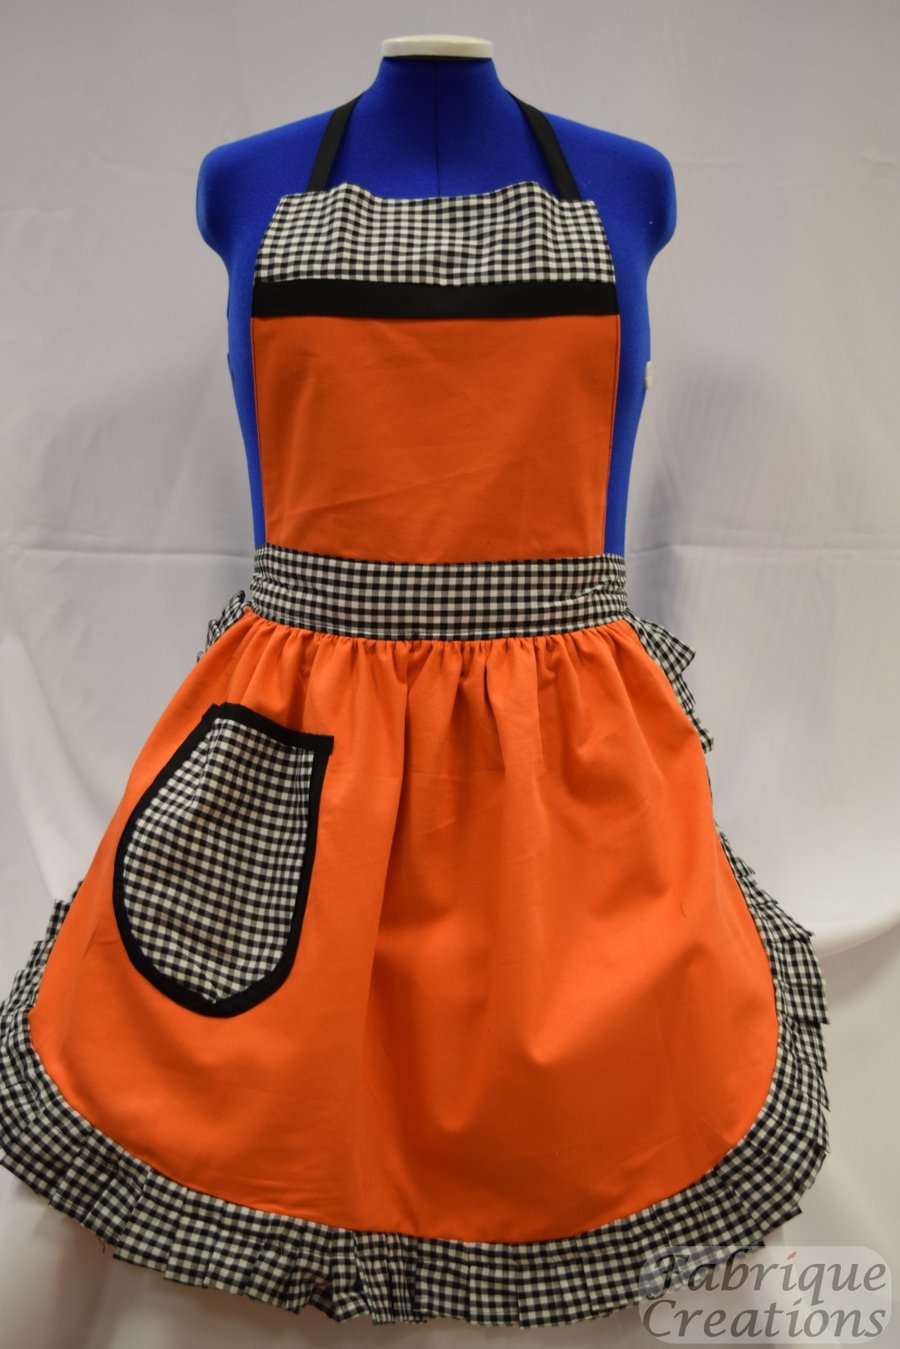 Vintage 50s Style Full Apron Pinny - Orange with Black & White Gingham Trim